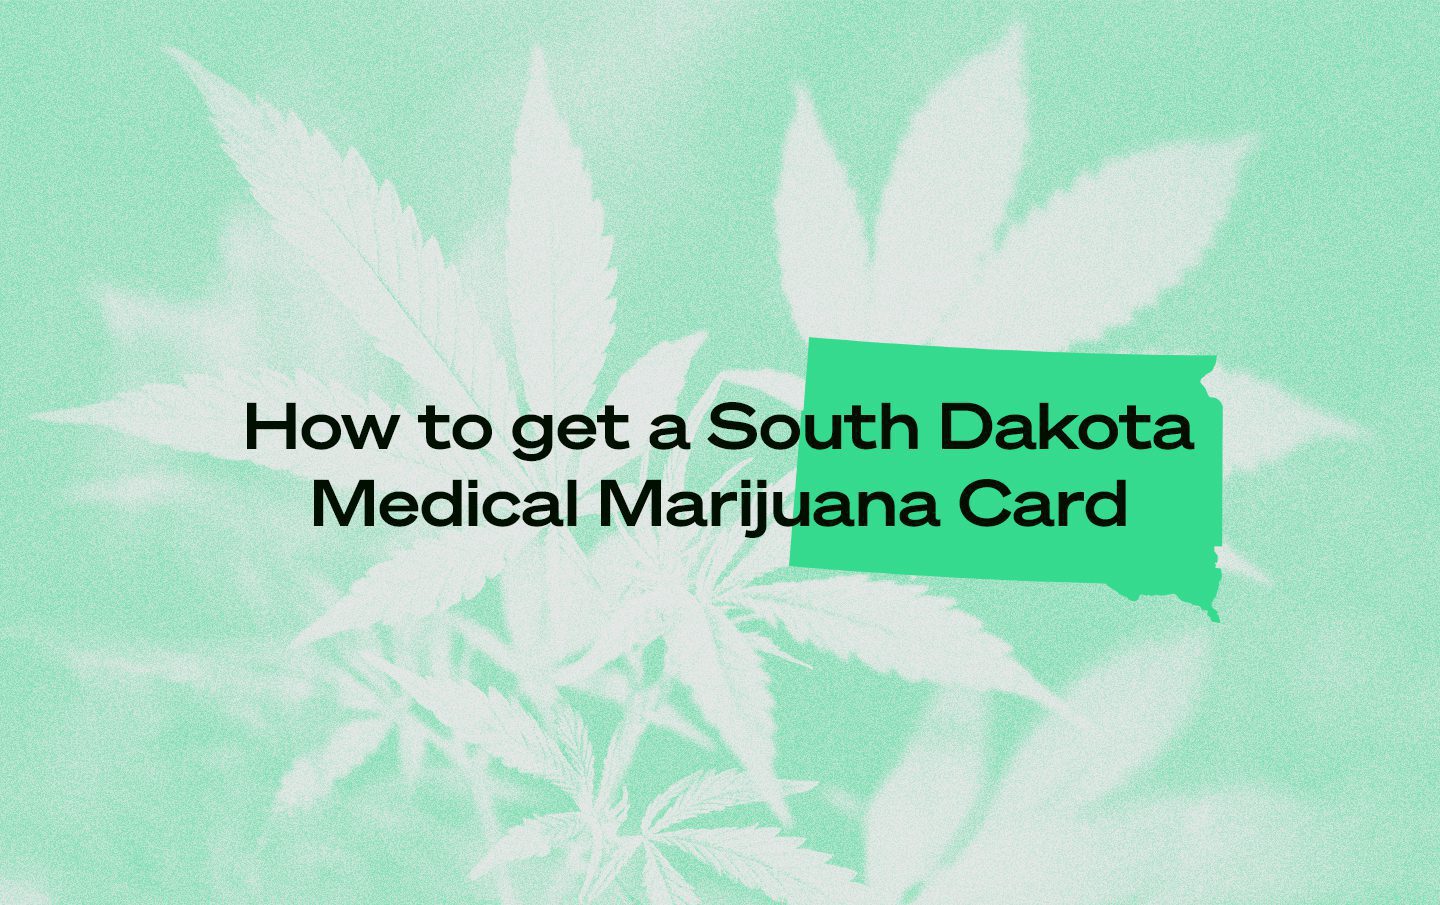 South Dakota medical marijuana card